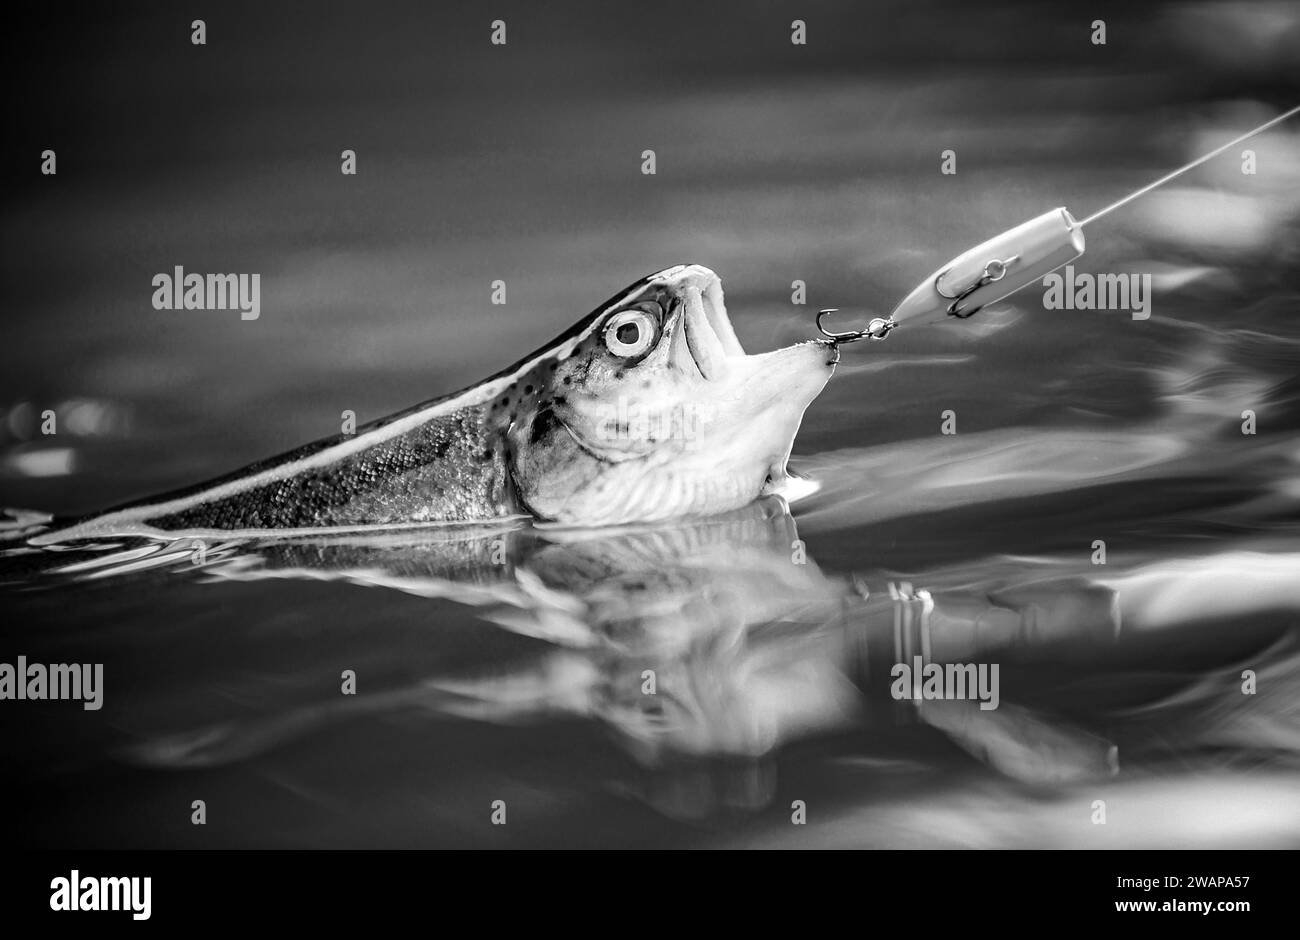 https://c8.alamy.com/comp/2WAPA57/steelhead-rainbow-trout-fly-fishing-for-trout-brown-trout-being-caught-in-fishing-net-2WAPA57.jpg